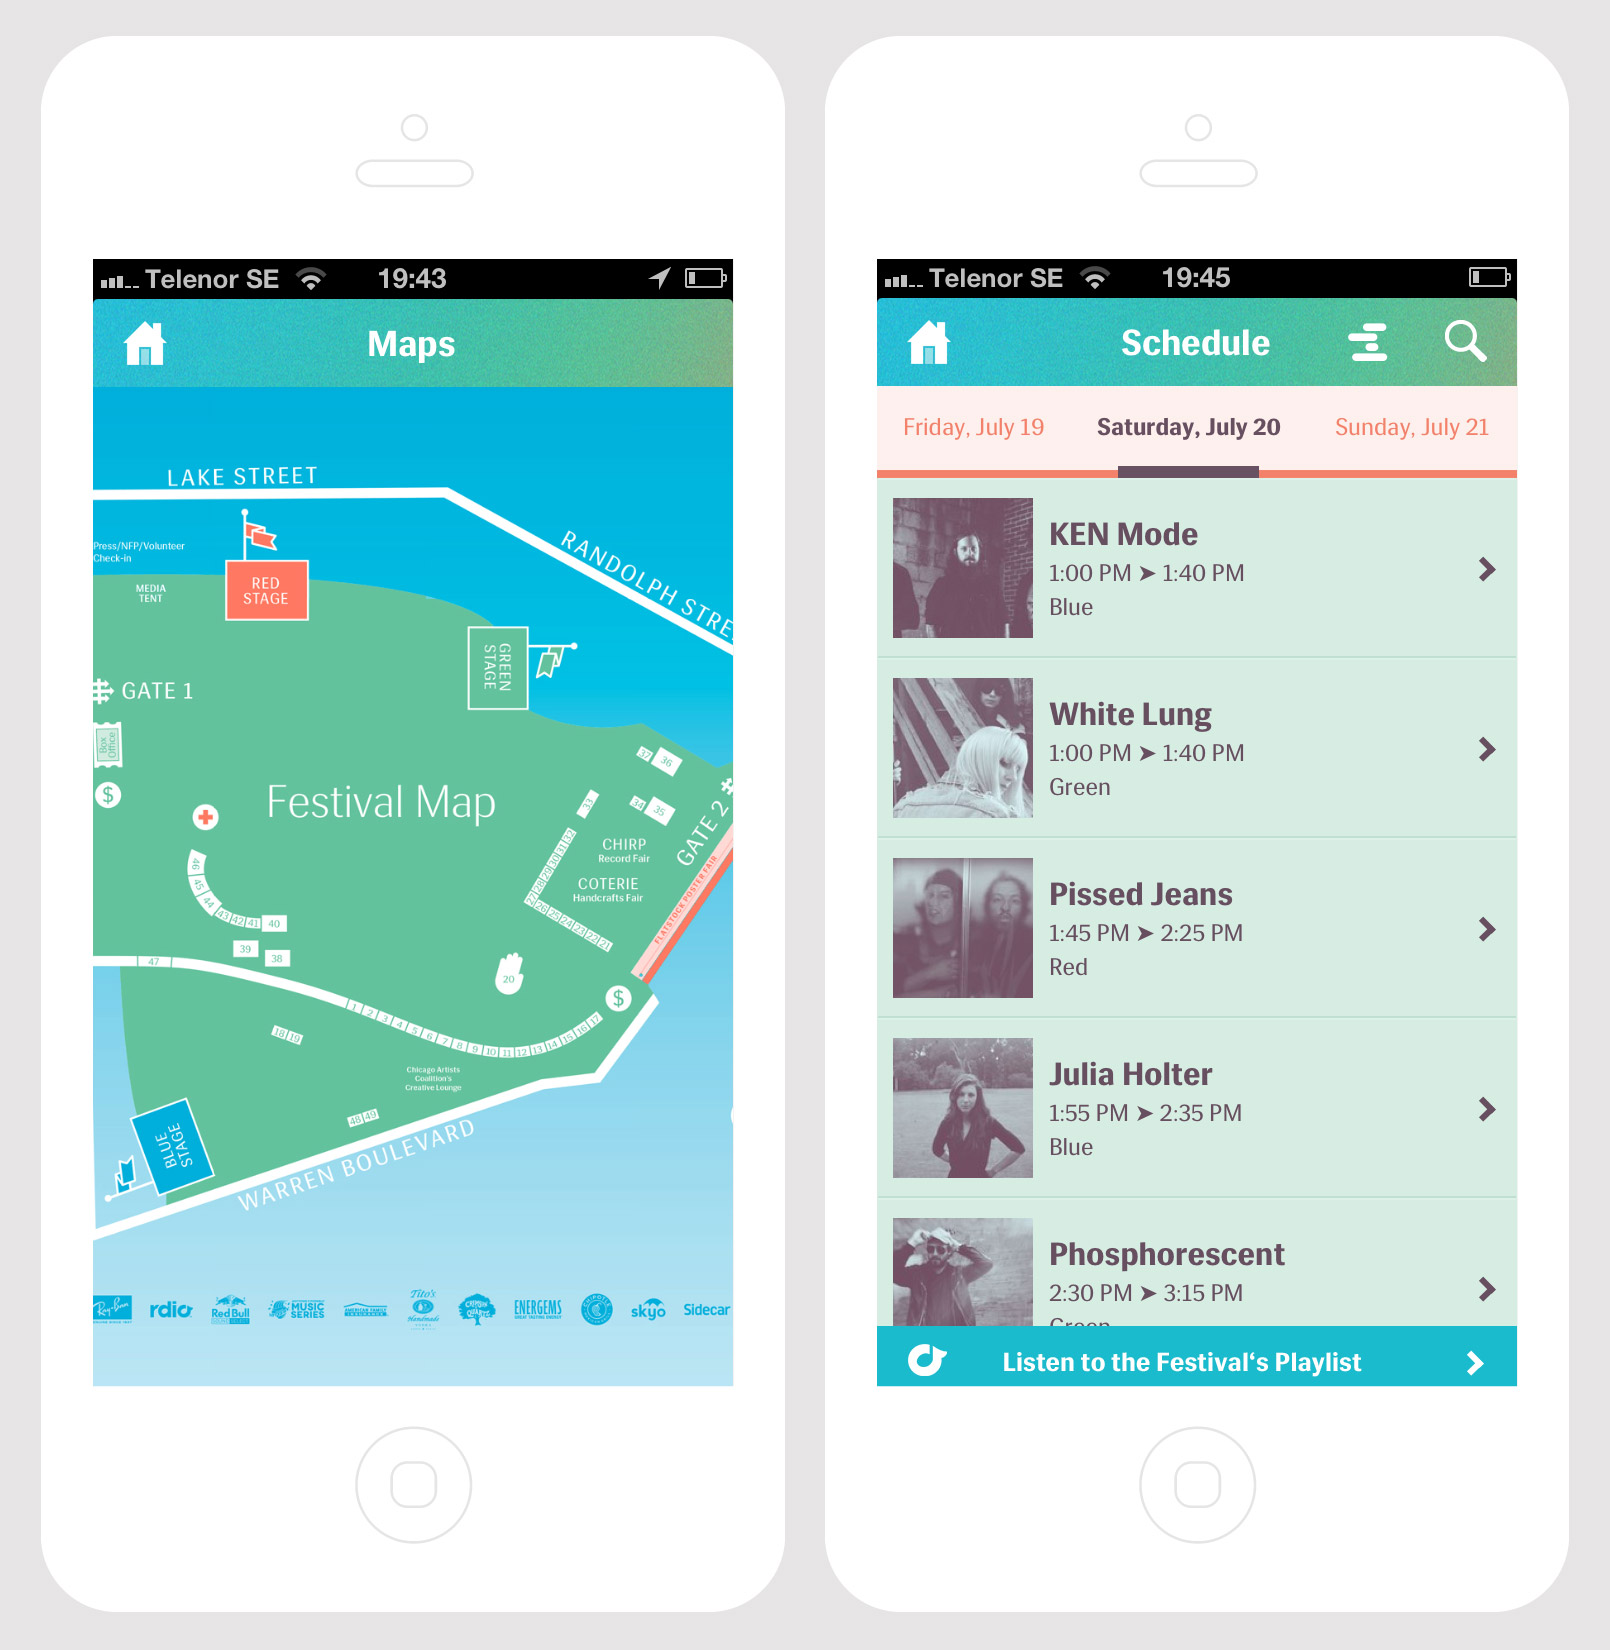 2013 Pitchfork Music Festival App - Fonts In Use